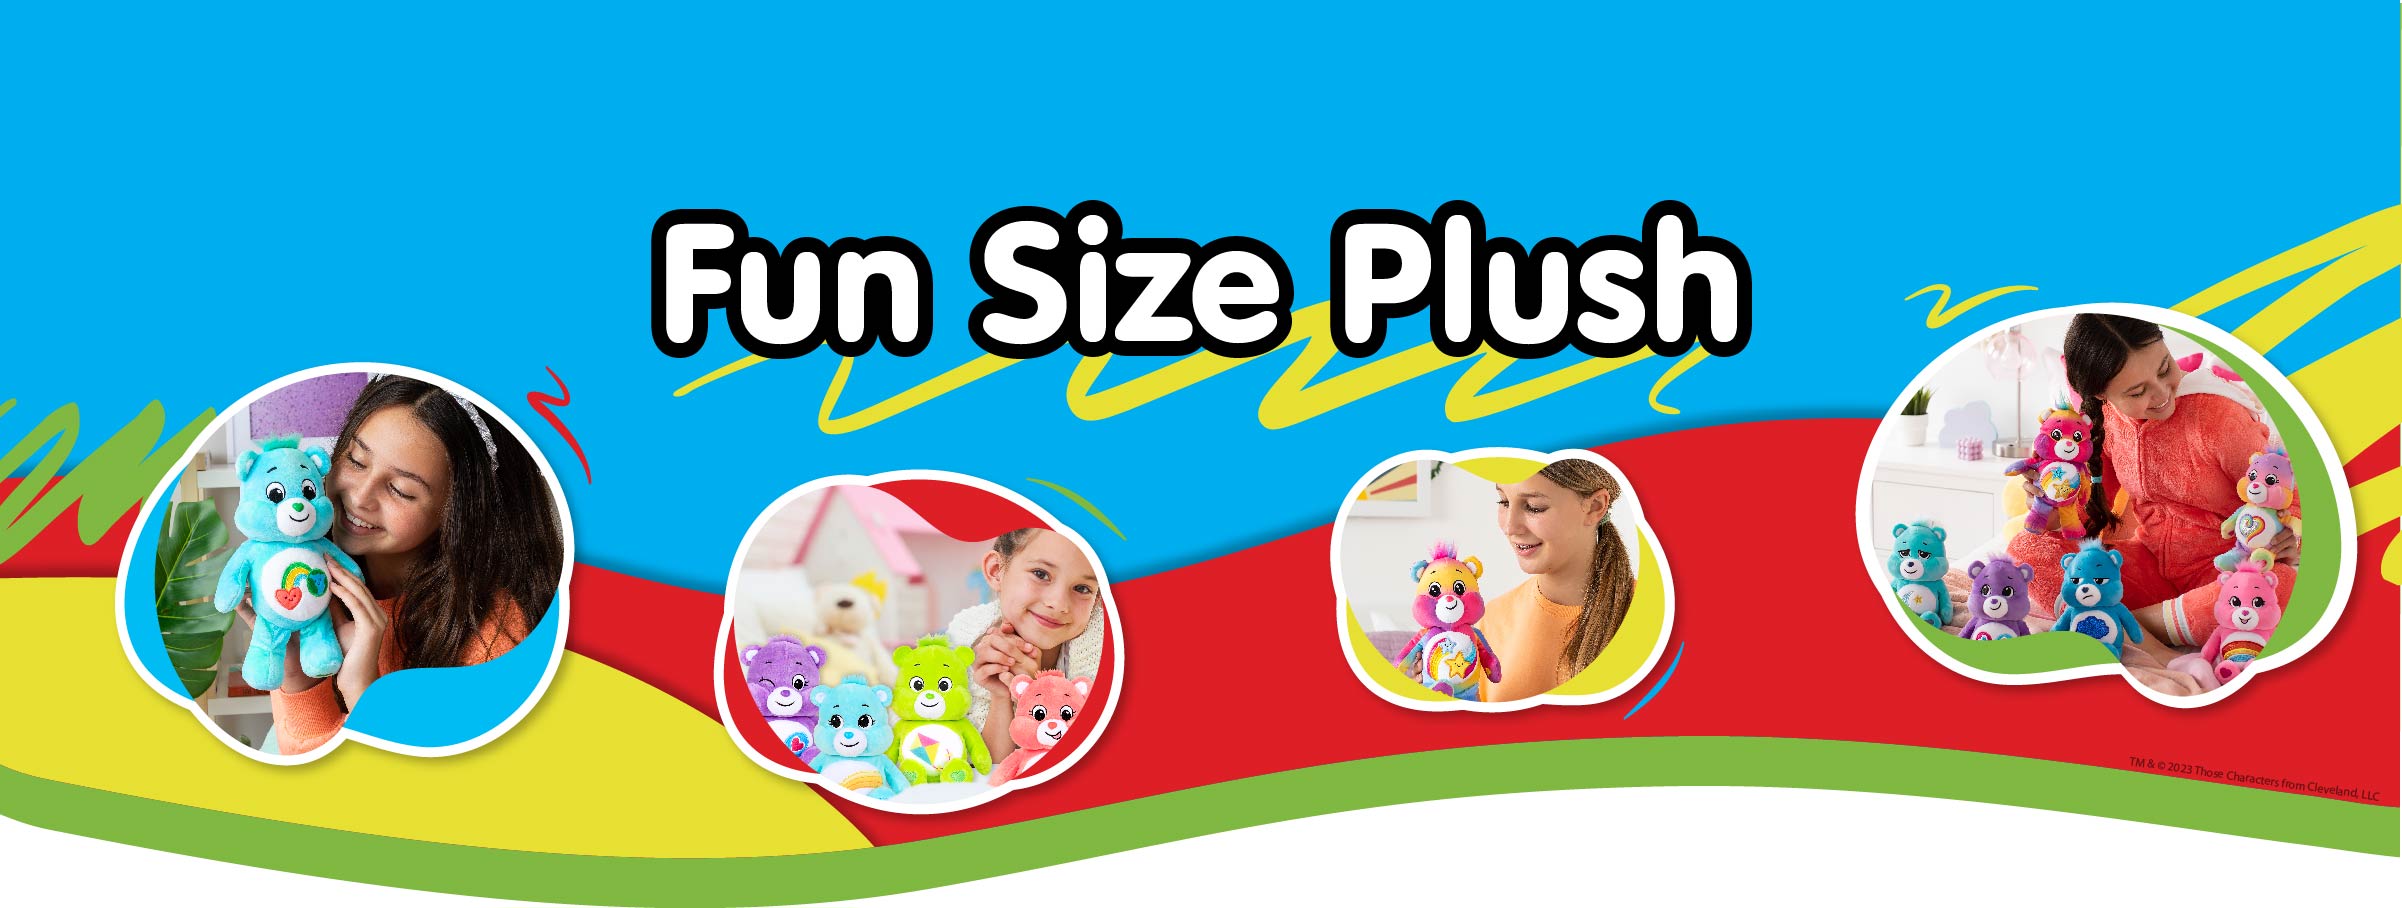 Fun Size Plush